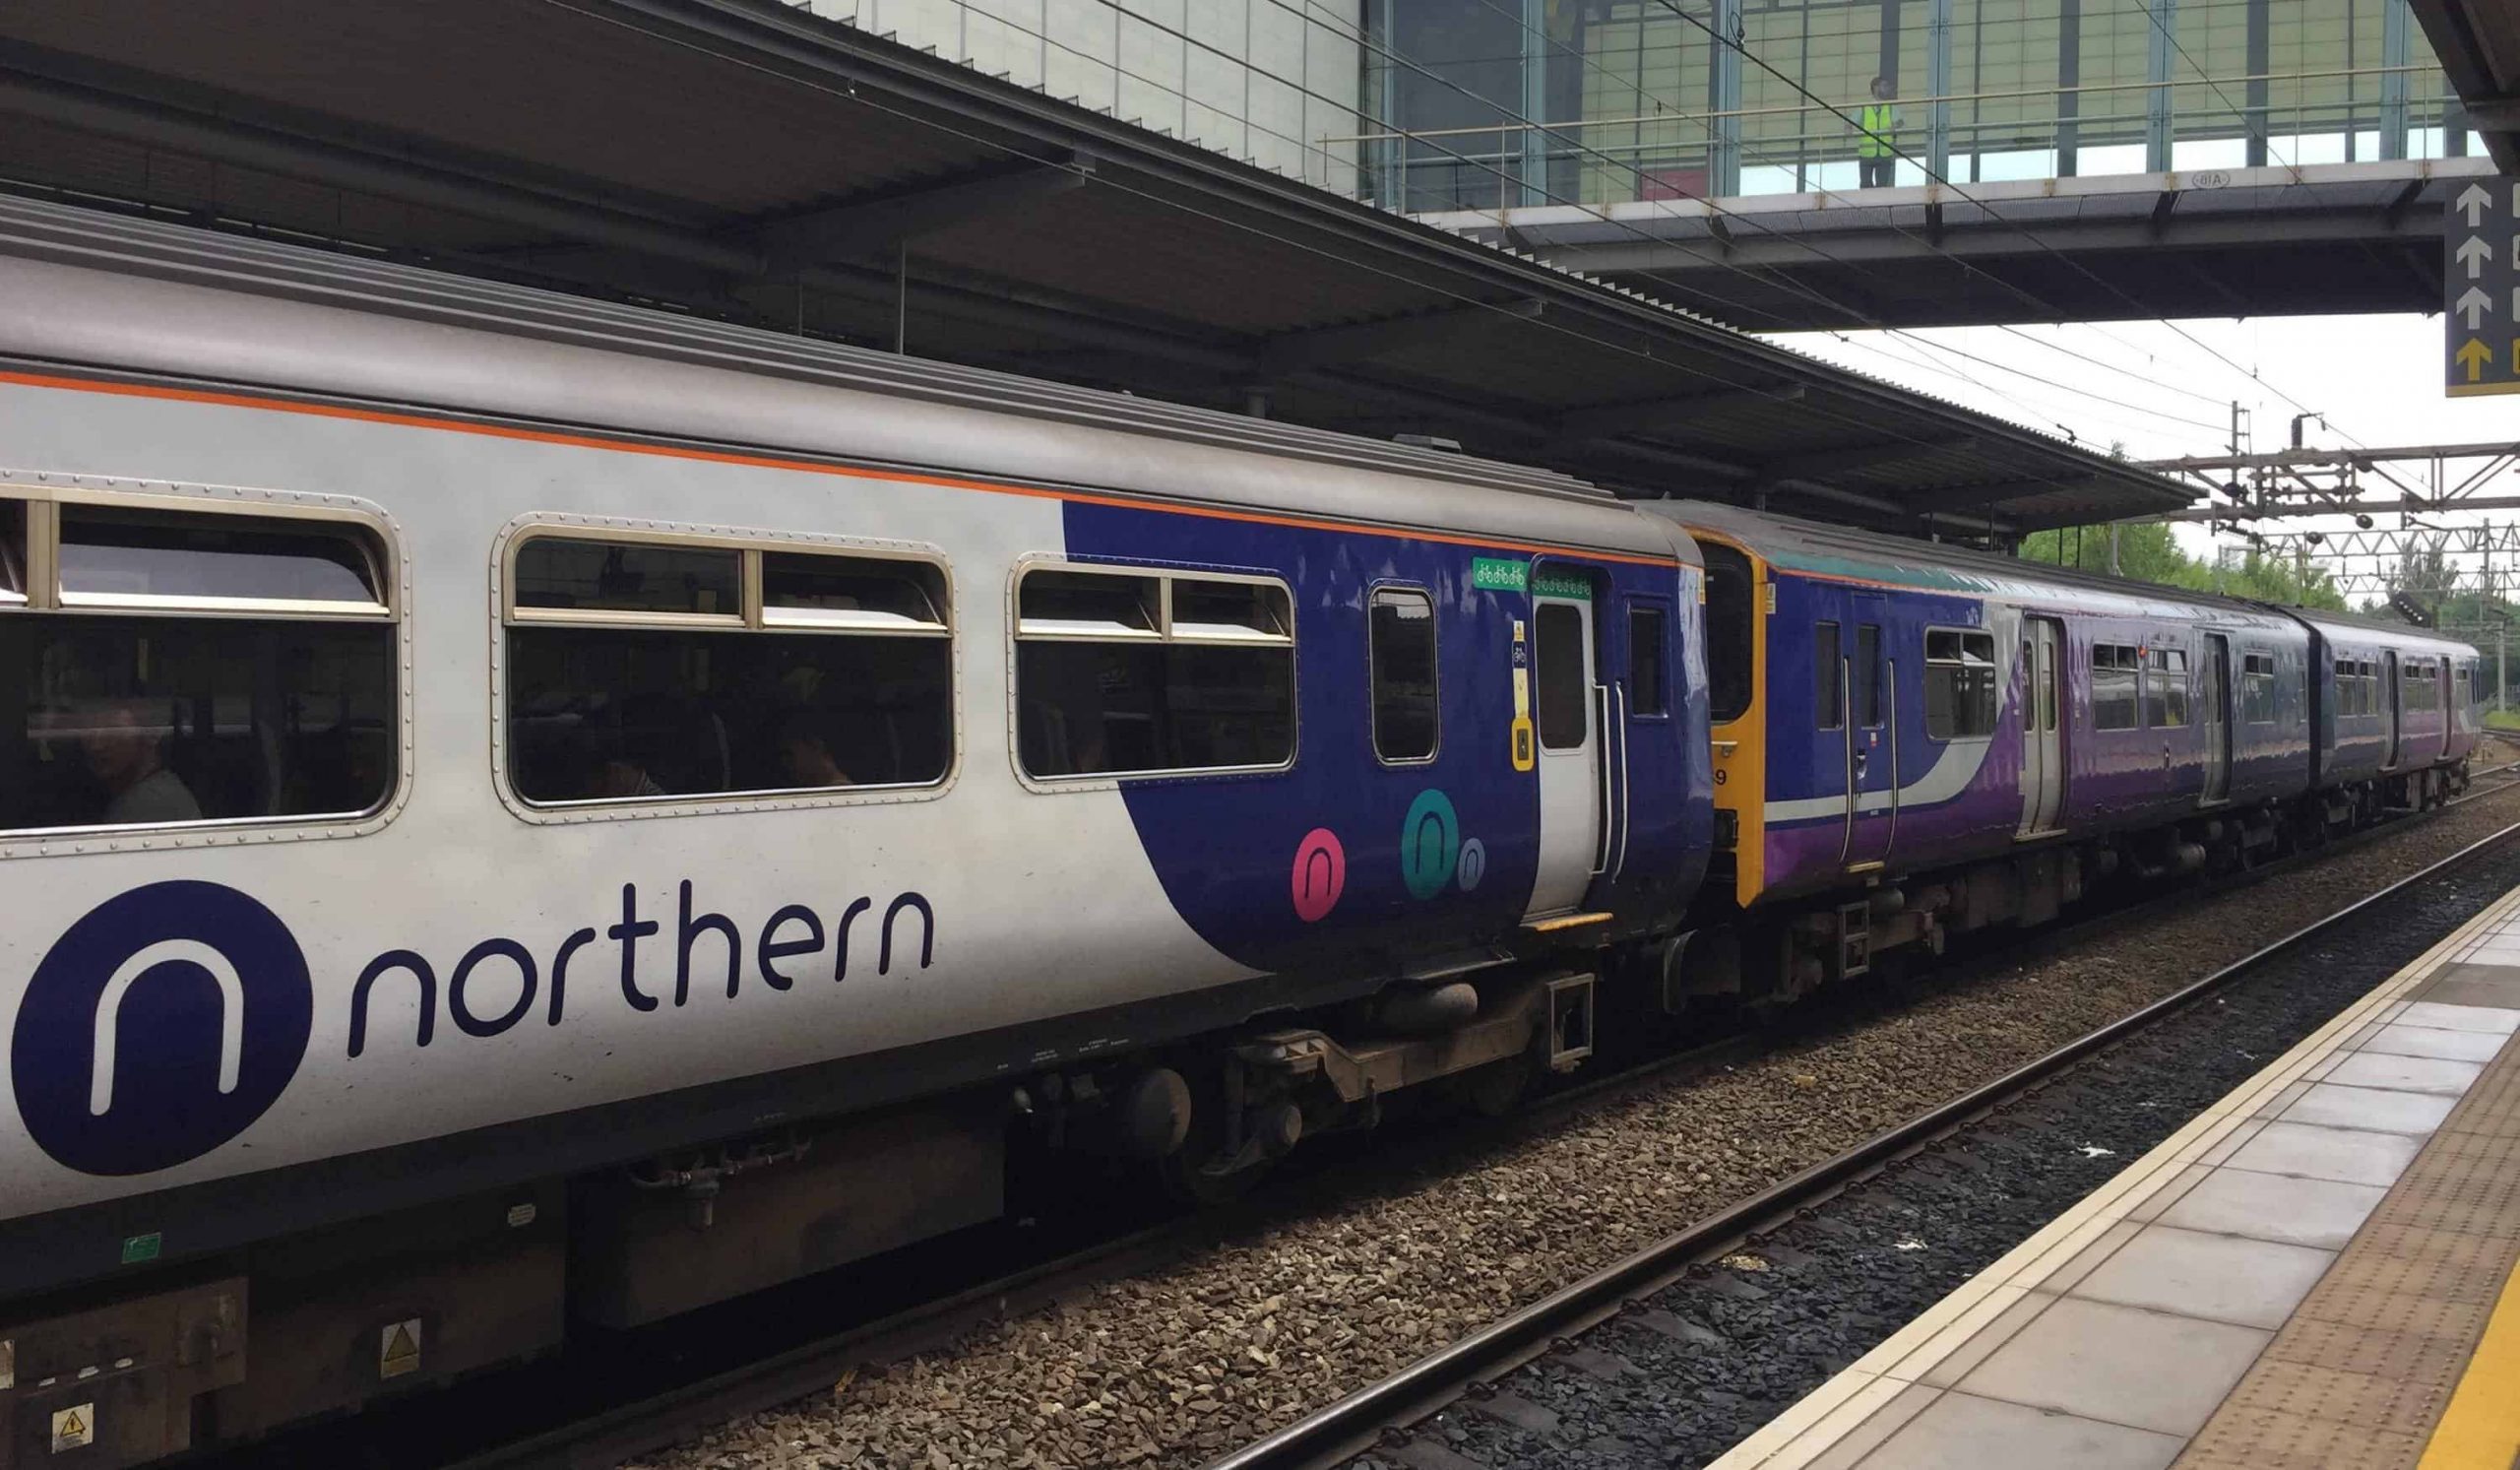 Government to take train operators under state control in nod to Corbyn manifesto